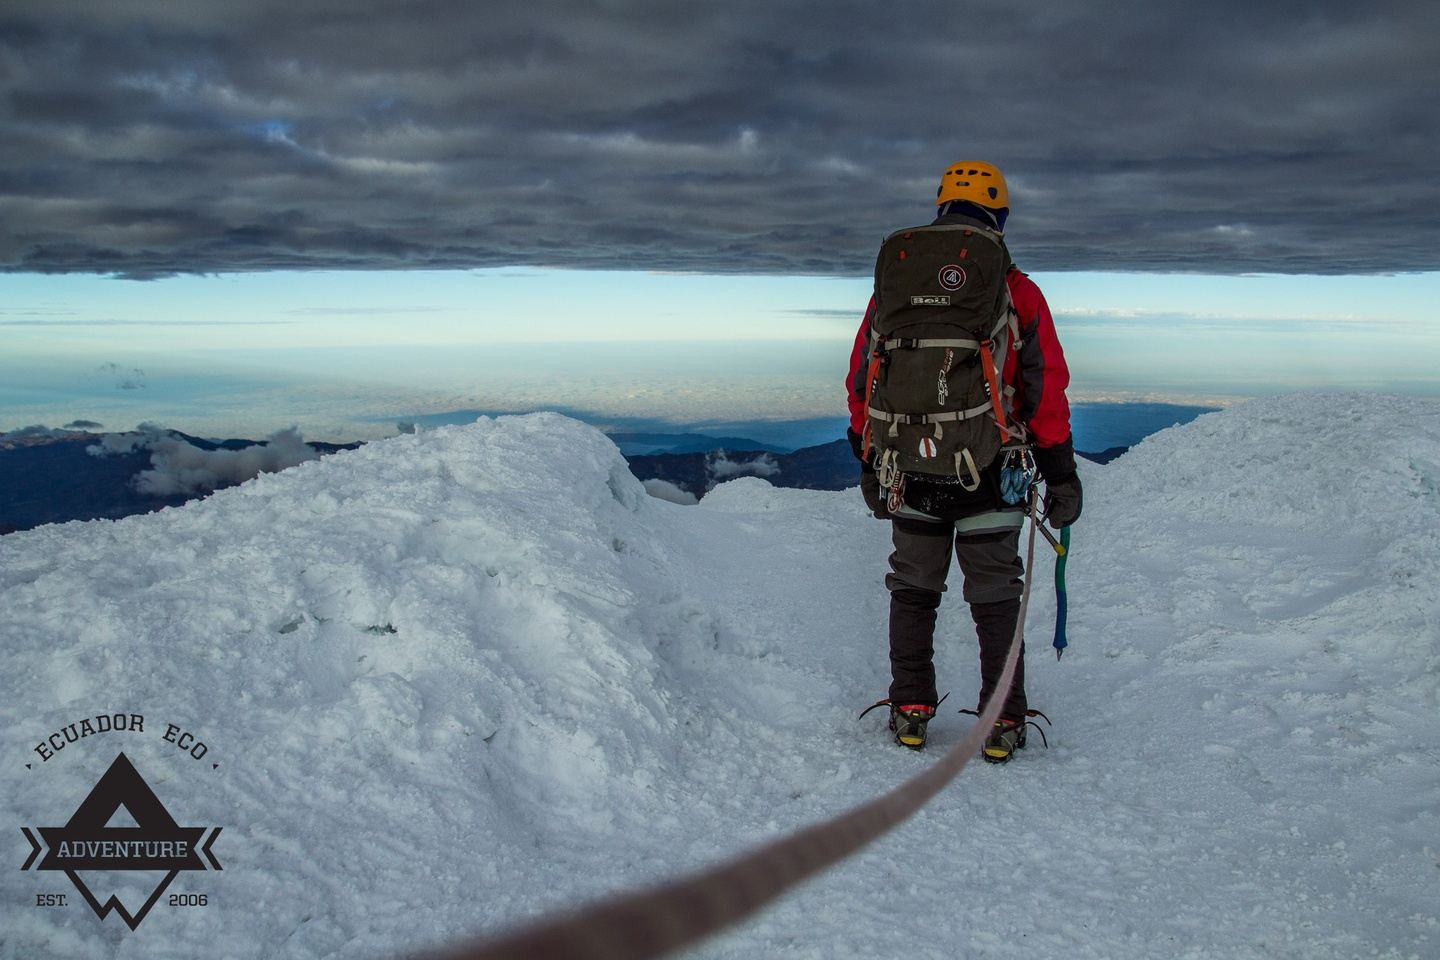 Chimborazo 4 day with Glacier training - 2 climbers